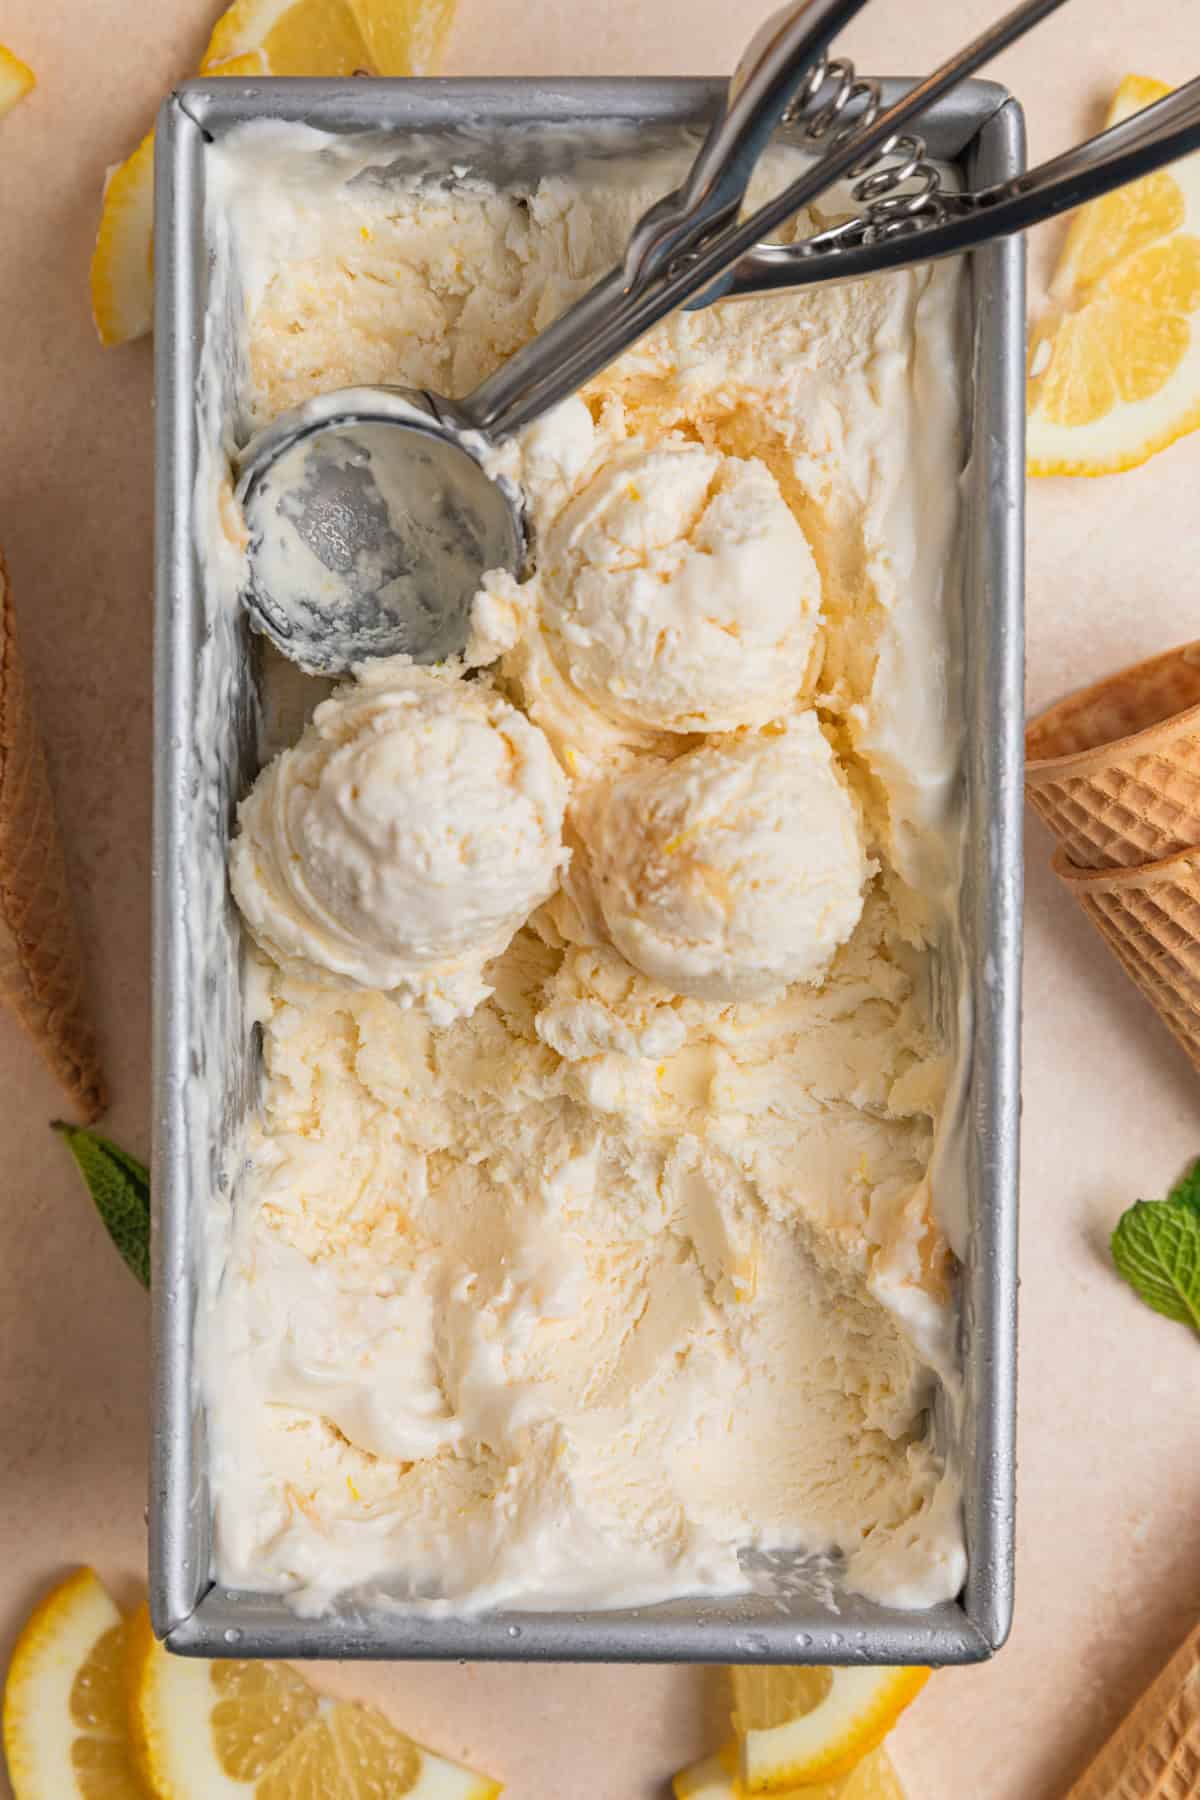 Overhead view of bread pan with scooped lemon ice cream.